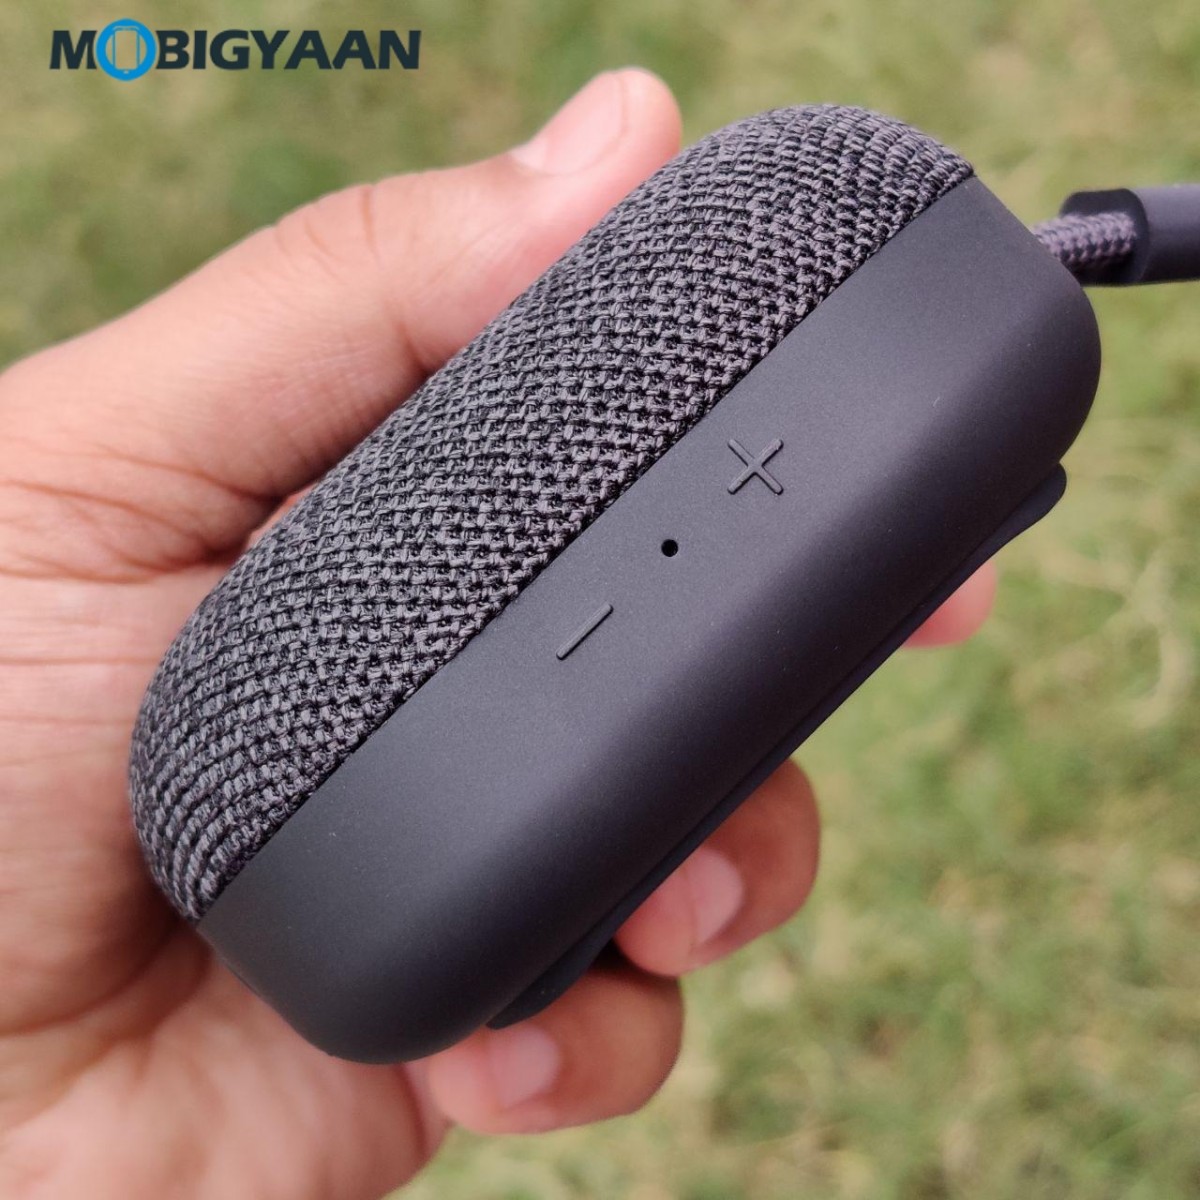 Mi Outdoor Bluetooth Speakers Hands On Review 3